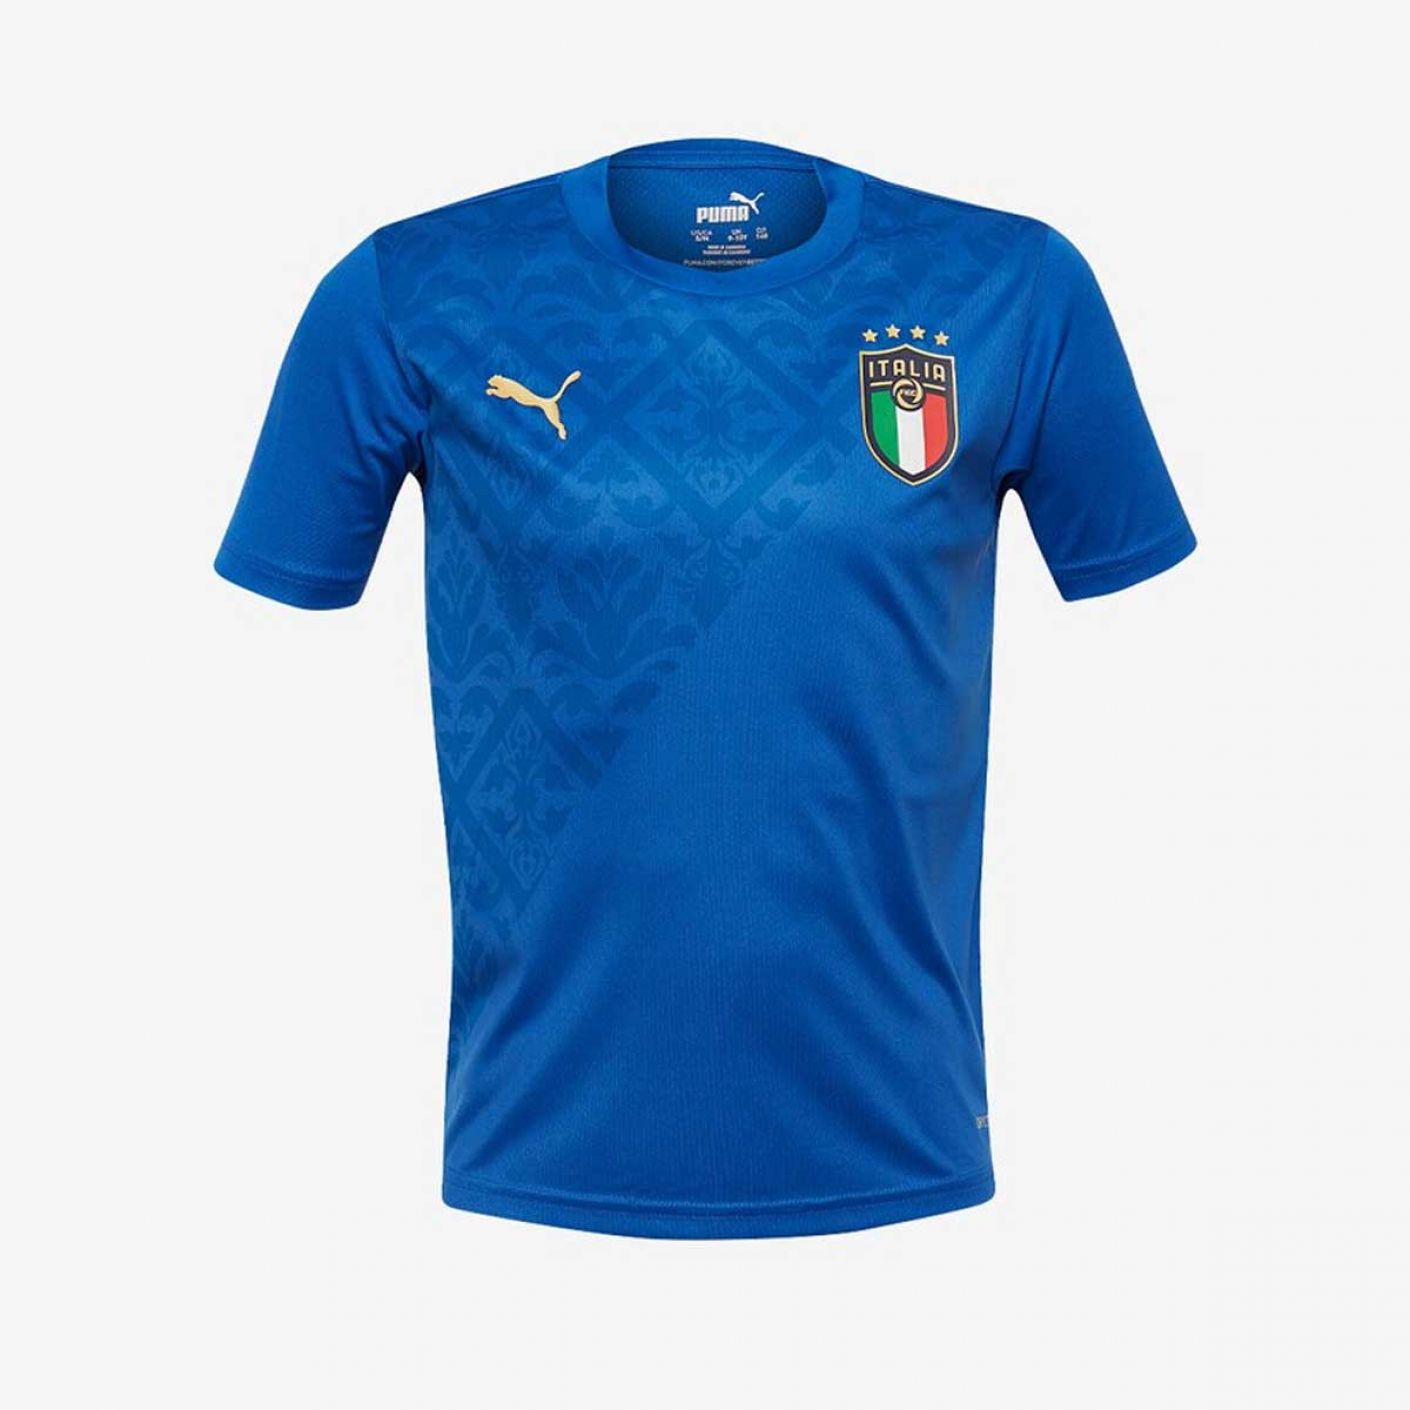 Puma T-shirt Figc Italia Official 2020-2021 for Kids